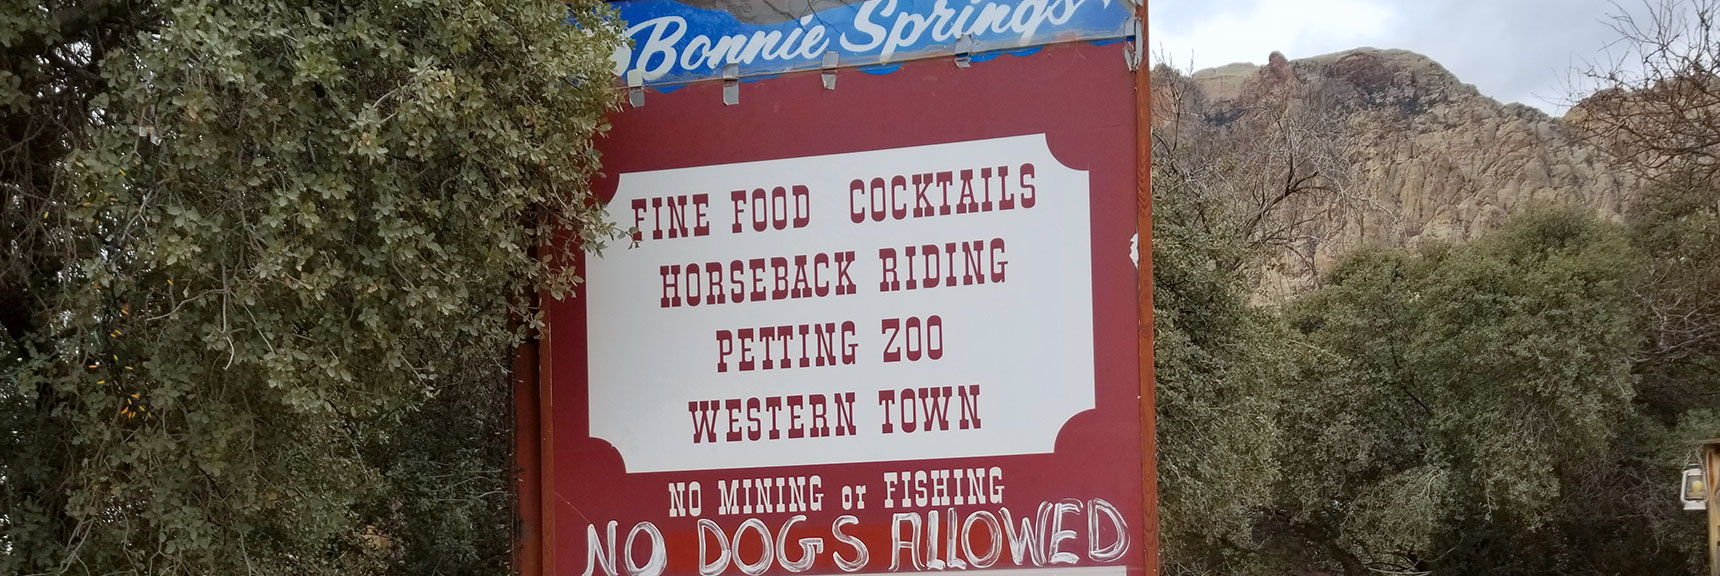 Amenities at Bonnie Springs Ranch, Nevada